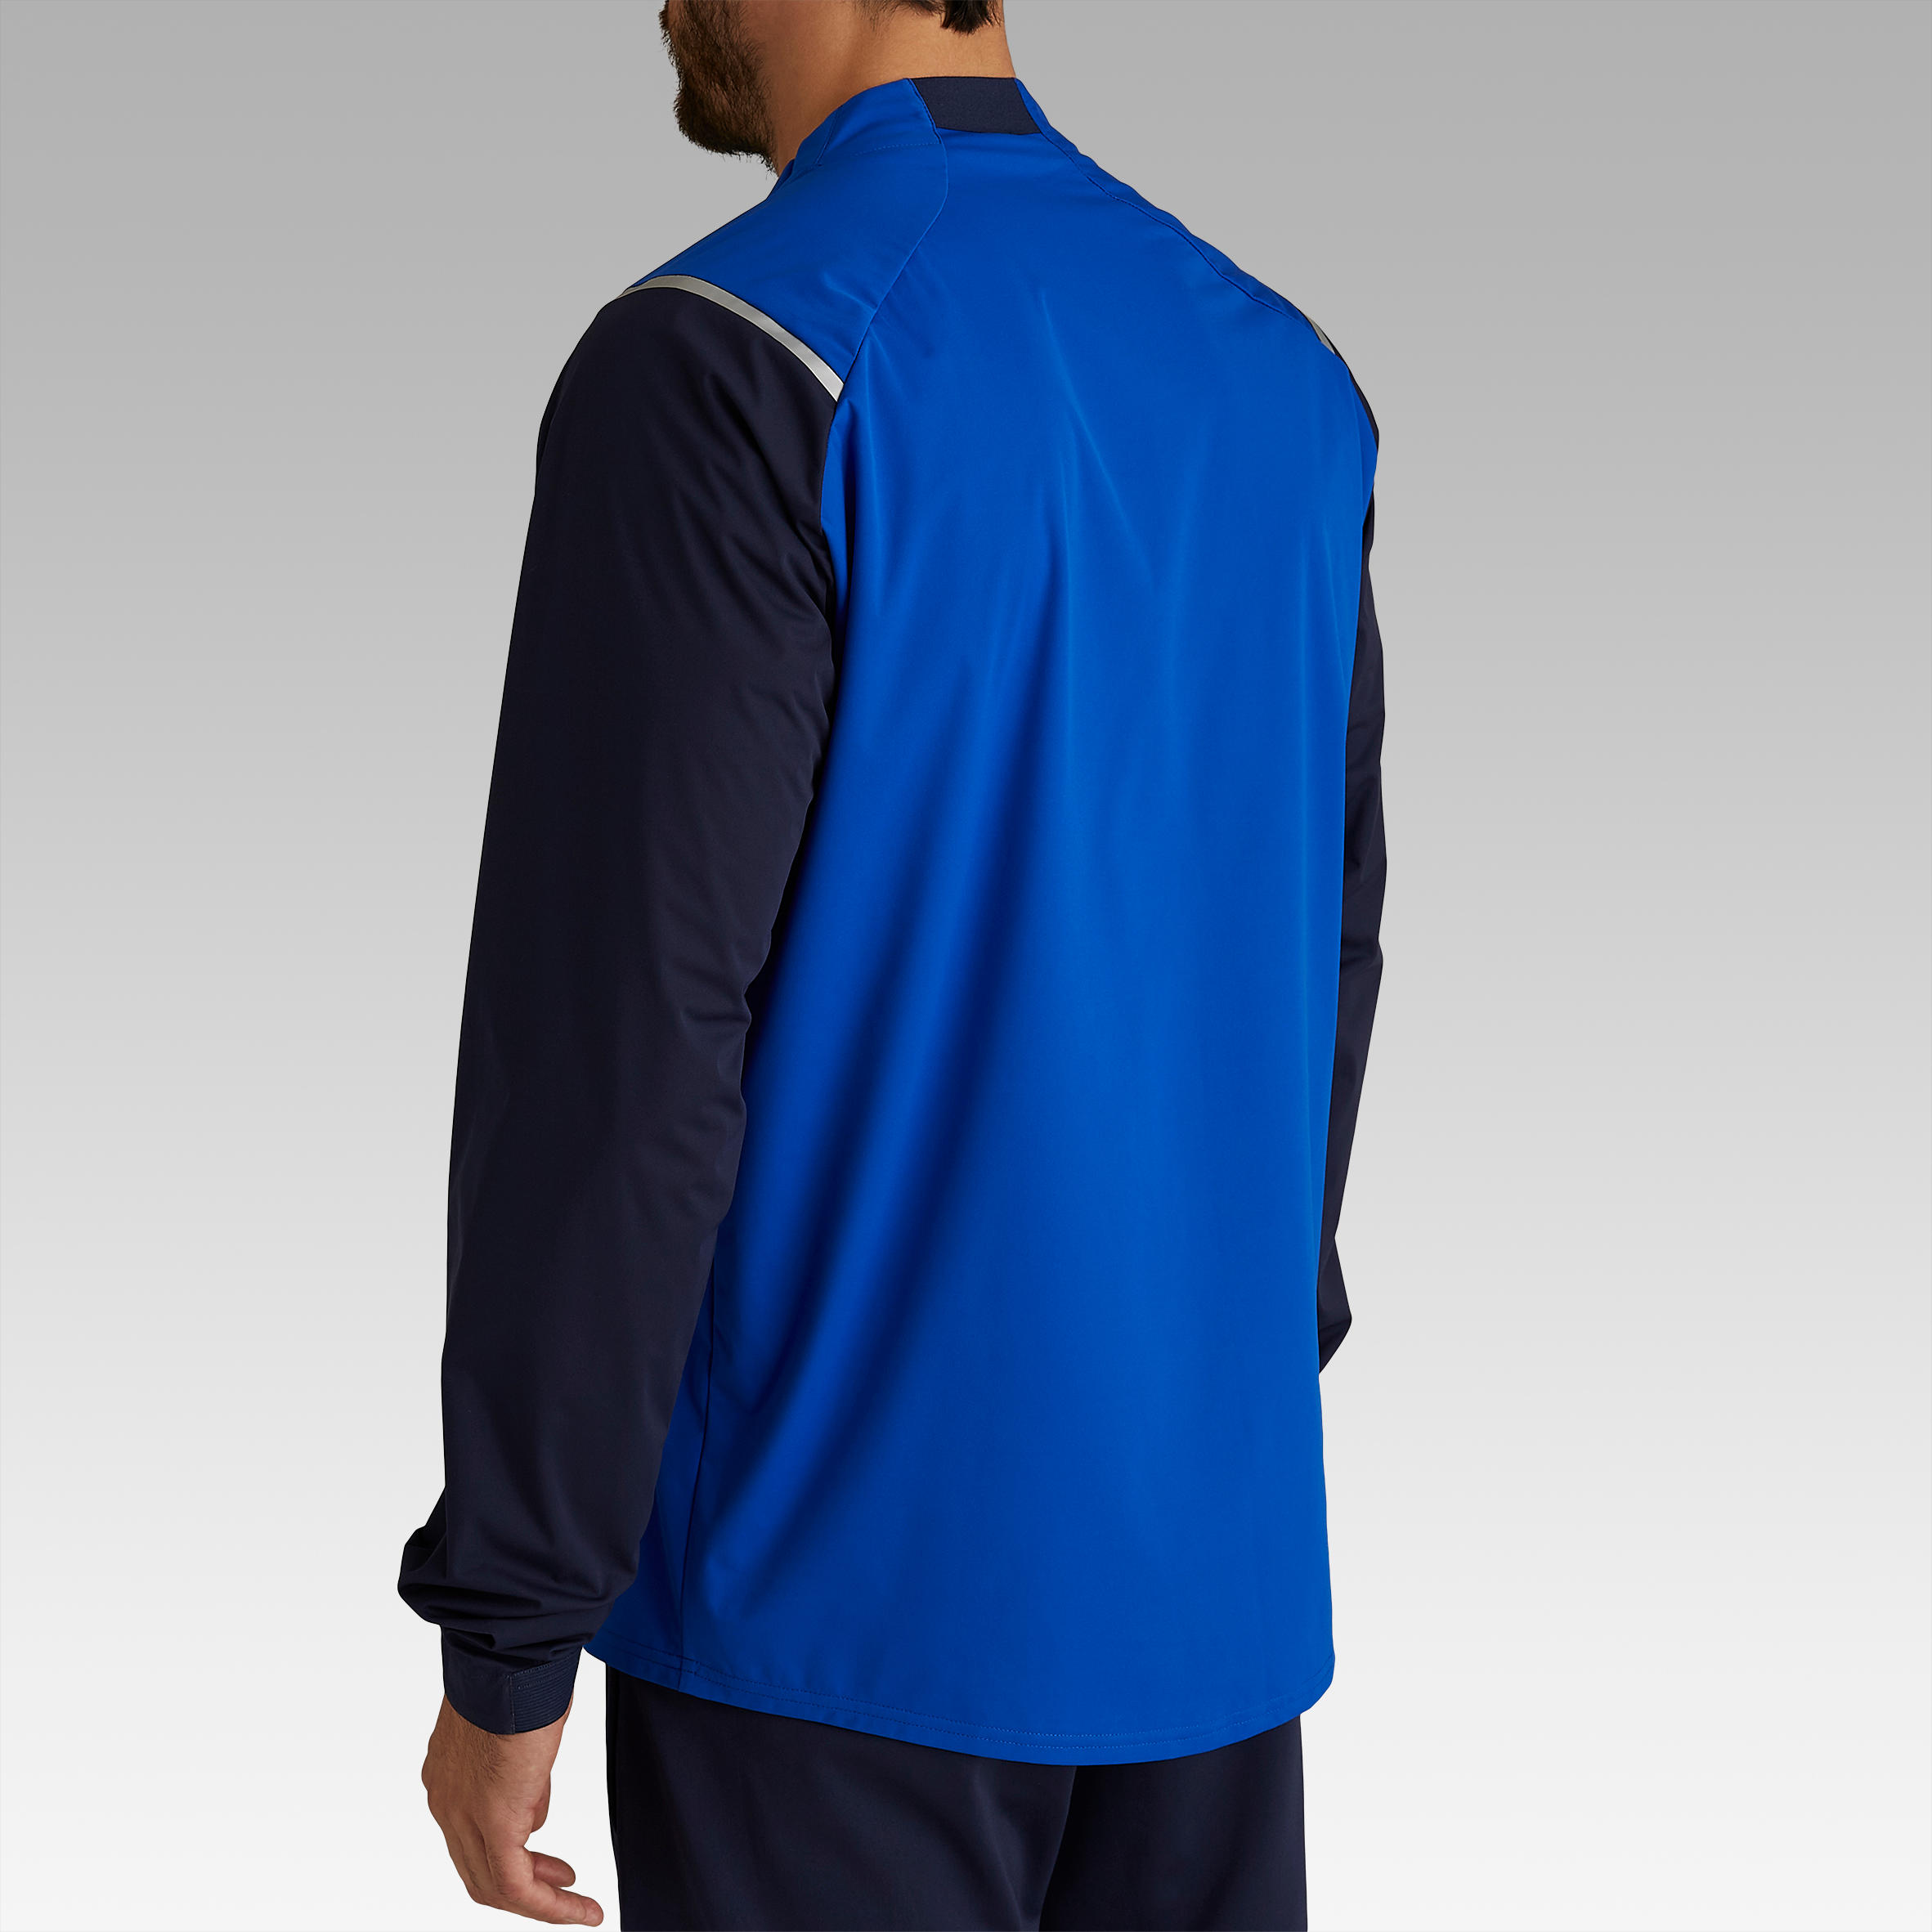 T500 Adult Waterproof Windproof Football Jacket - Blue 5/10